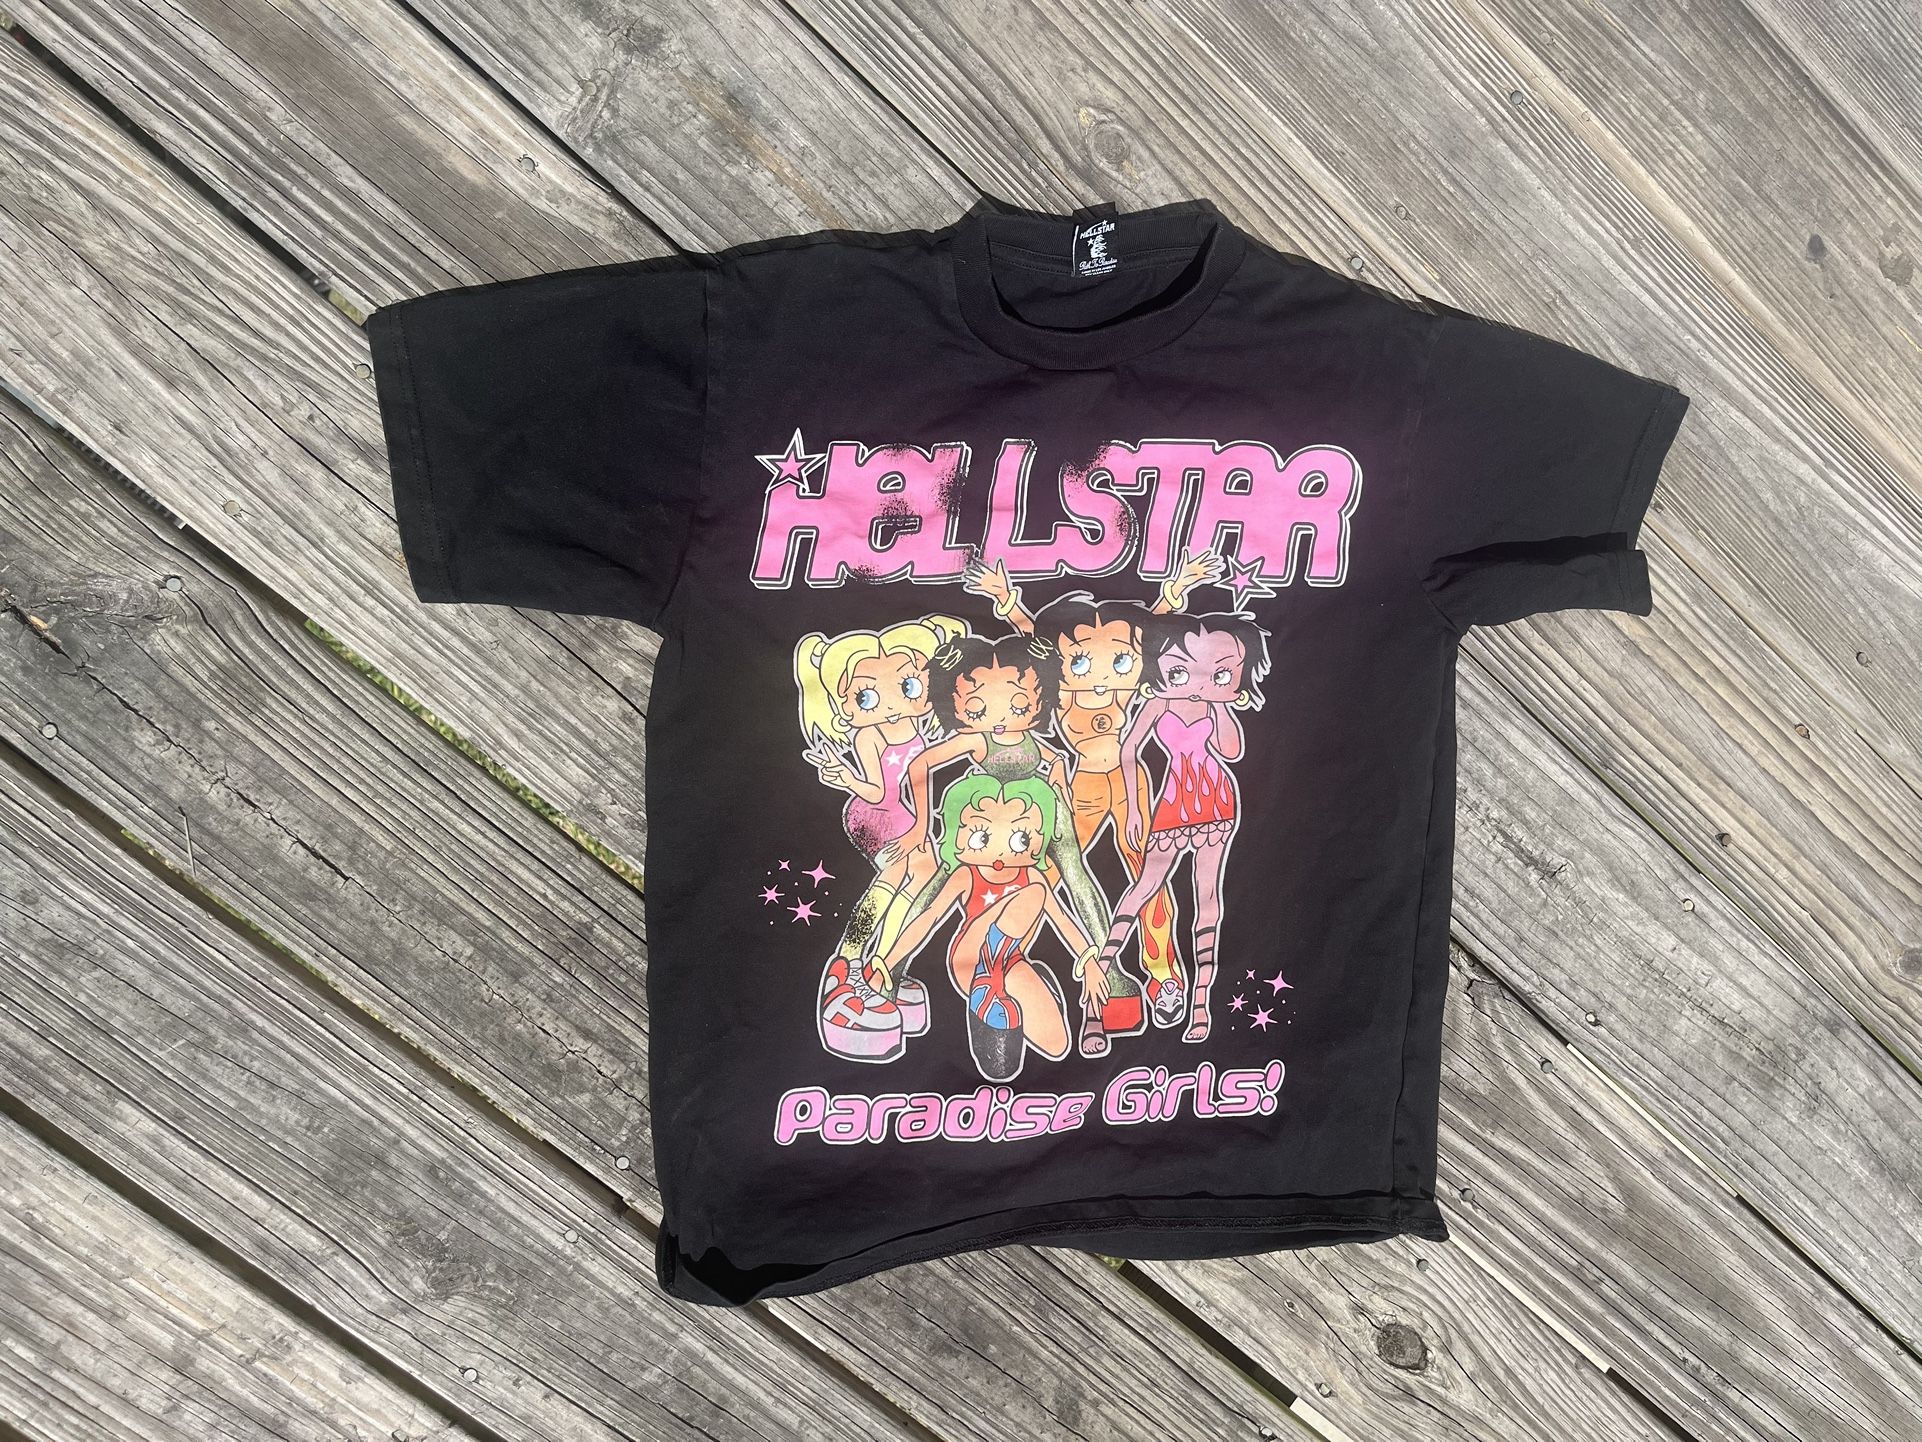 Hellstar shirt